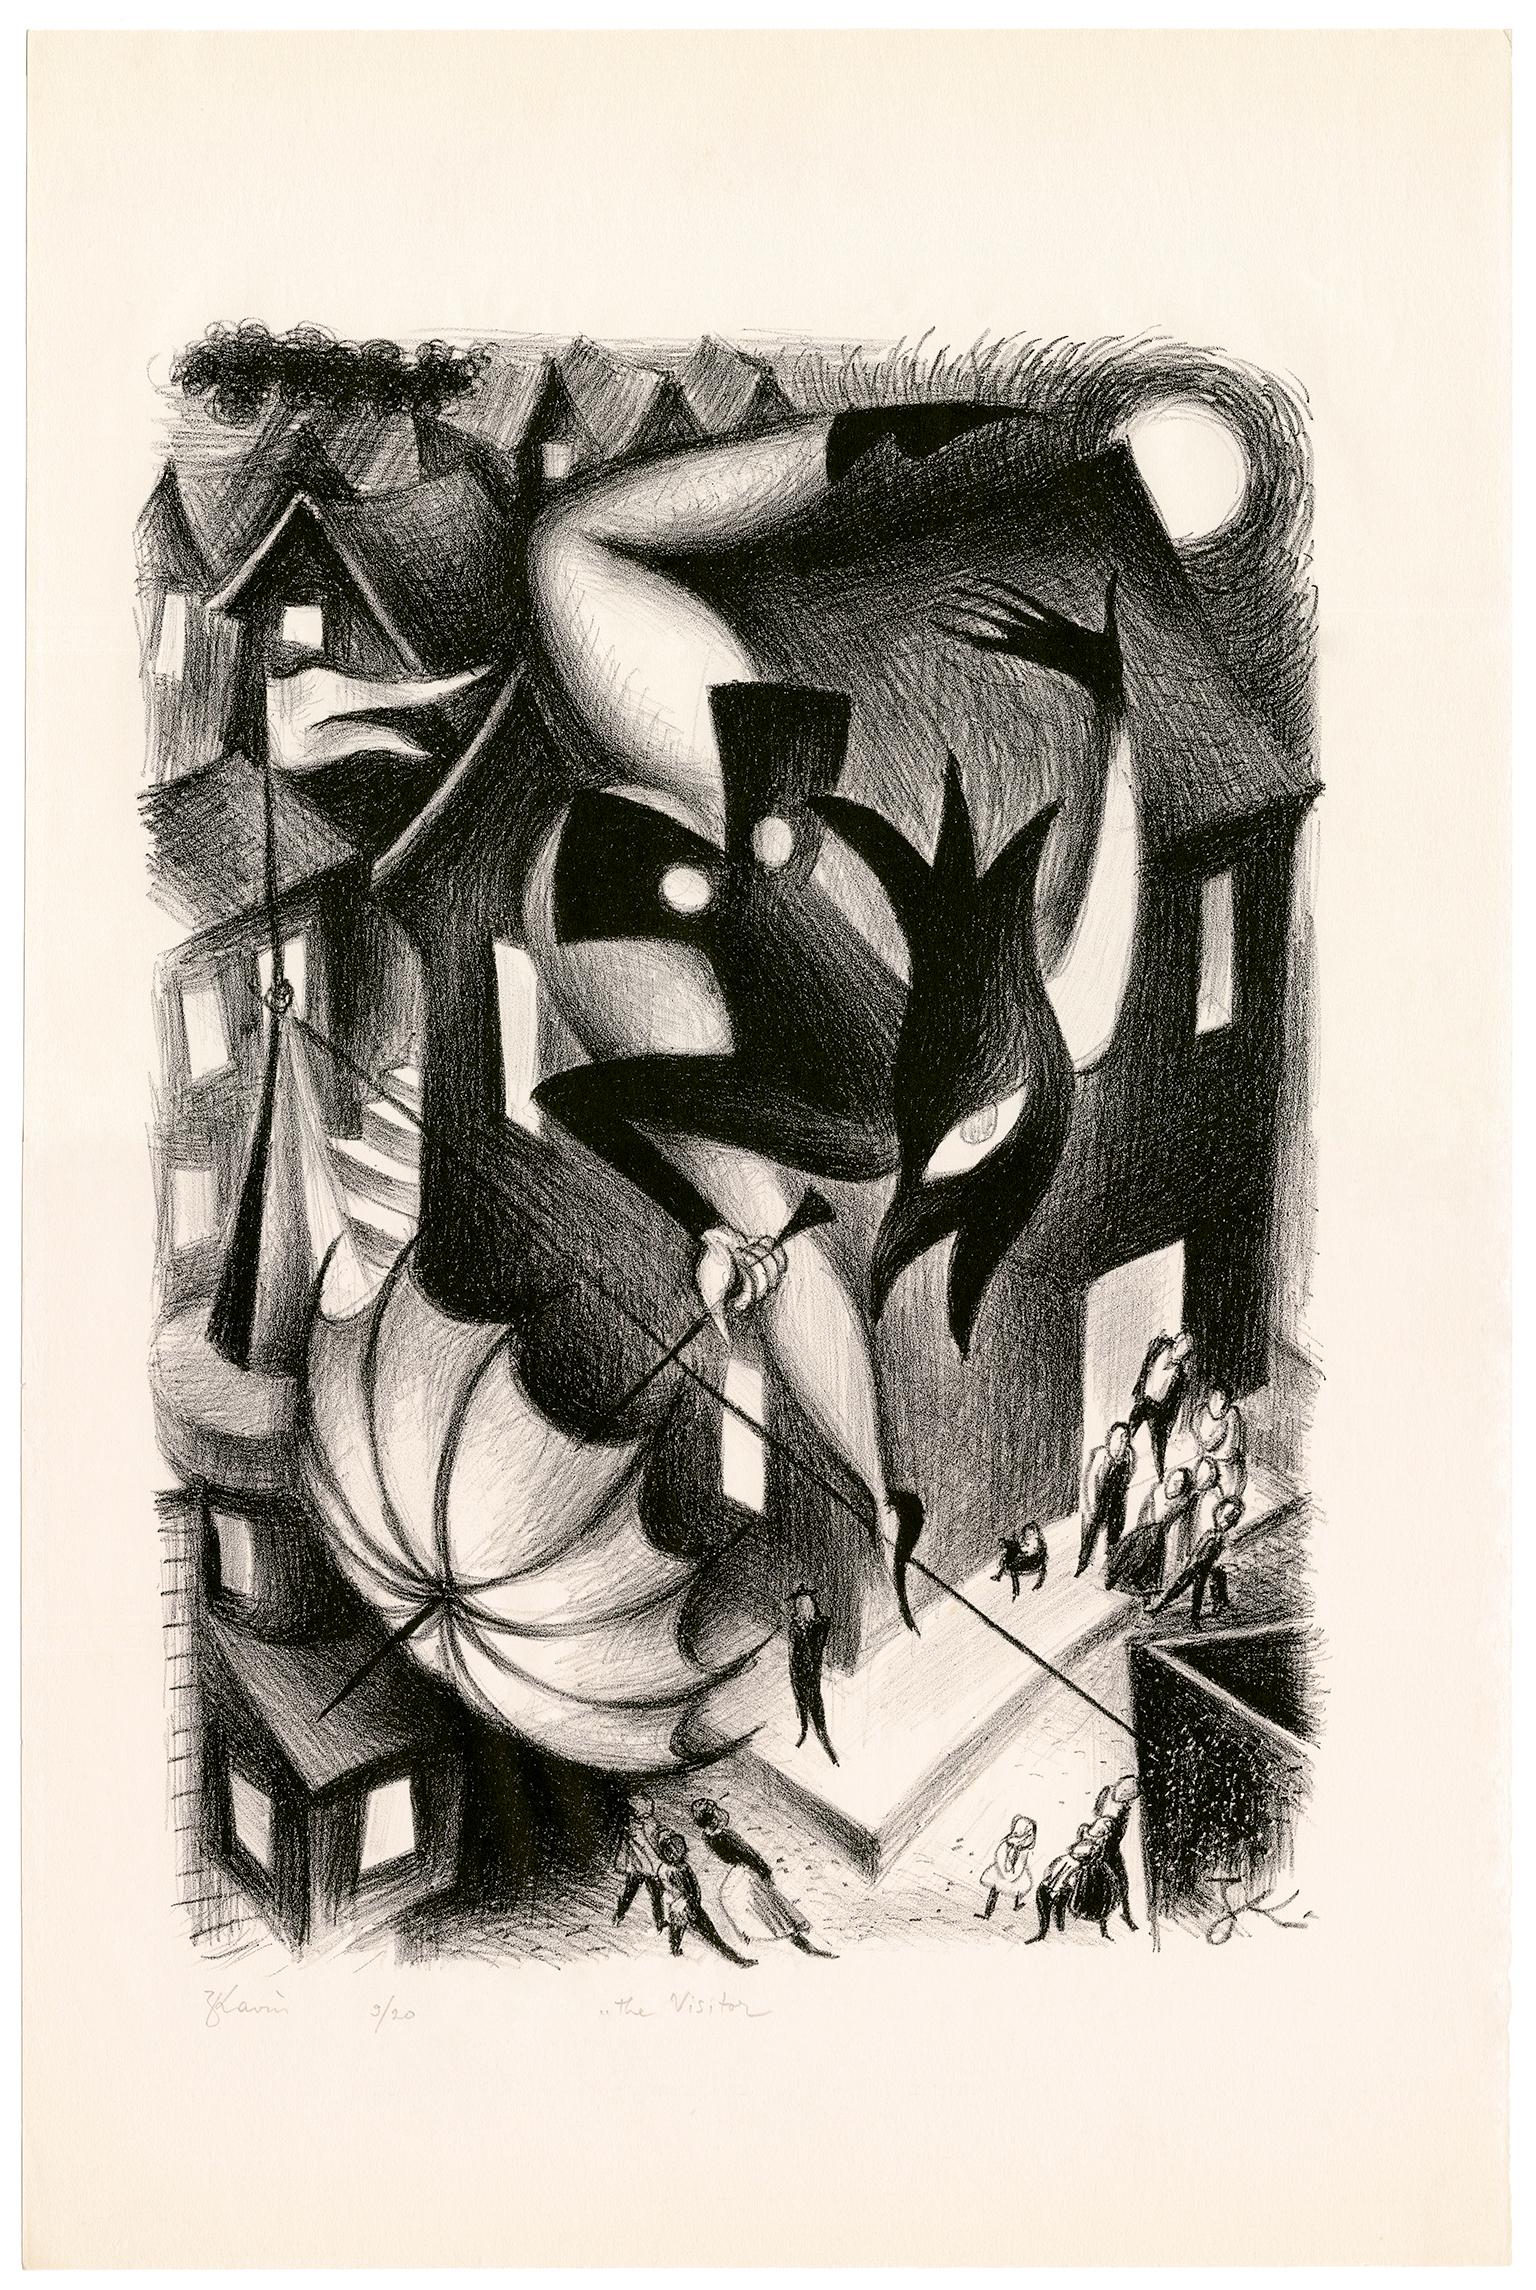 'The Visitor' — 1930s Surrealist Fantasy - Print by Zena Kavin